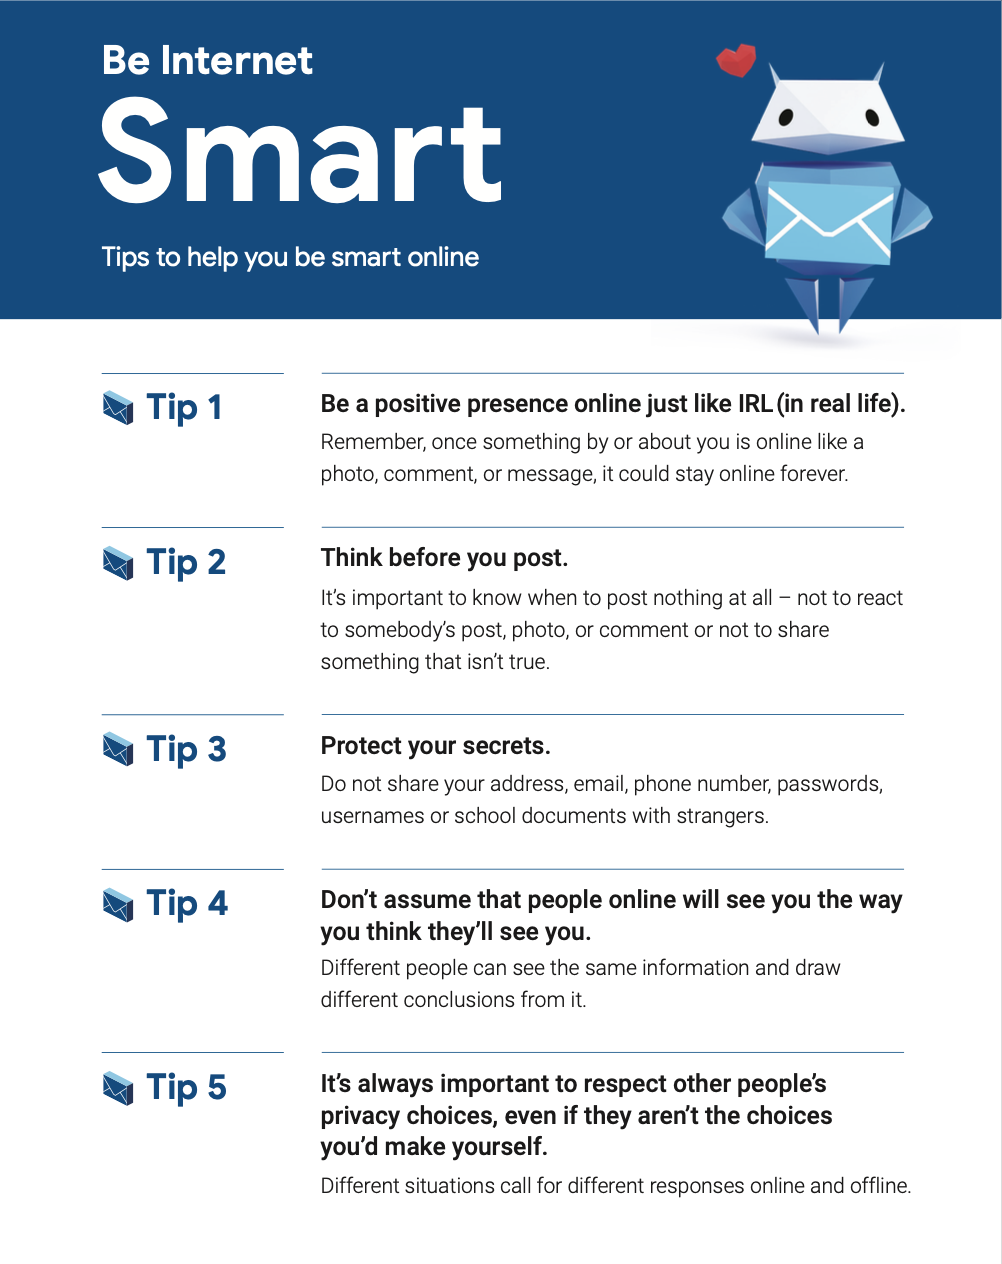 Be Interent Smart Tips